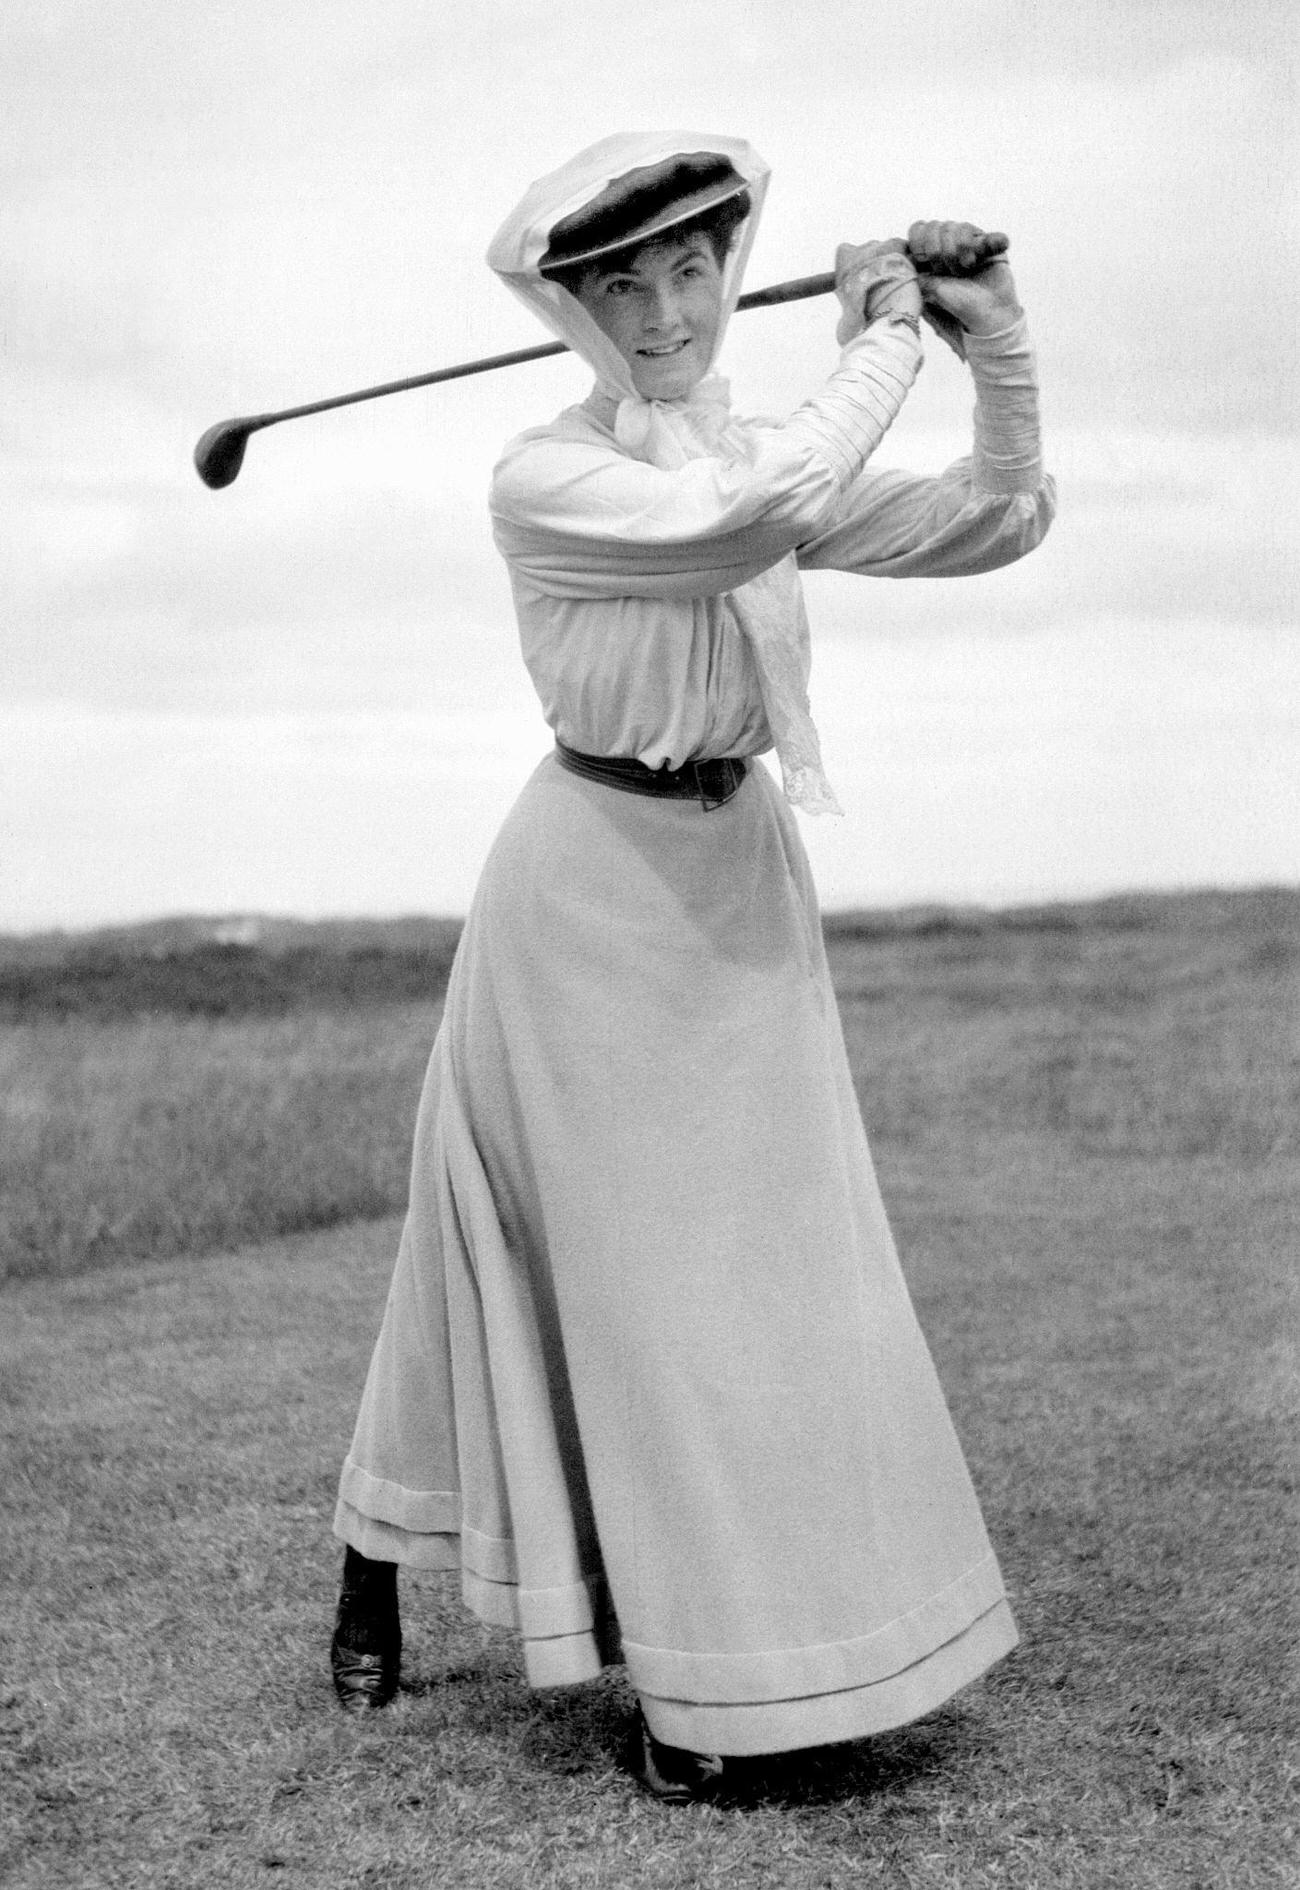 Early 20th-century woman golfer, circa 1910.